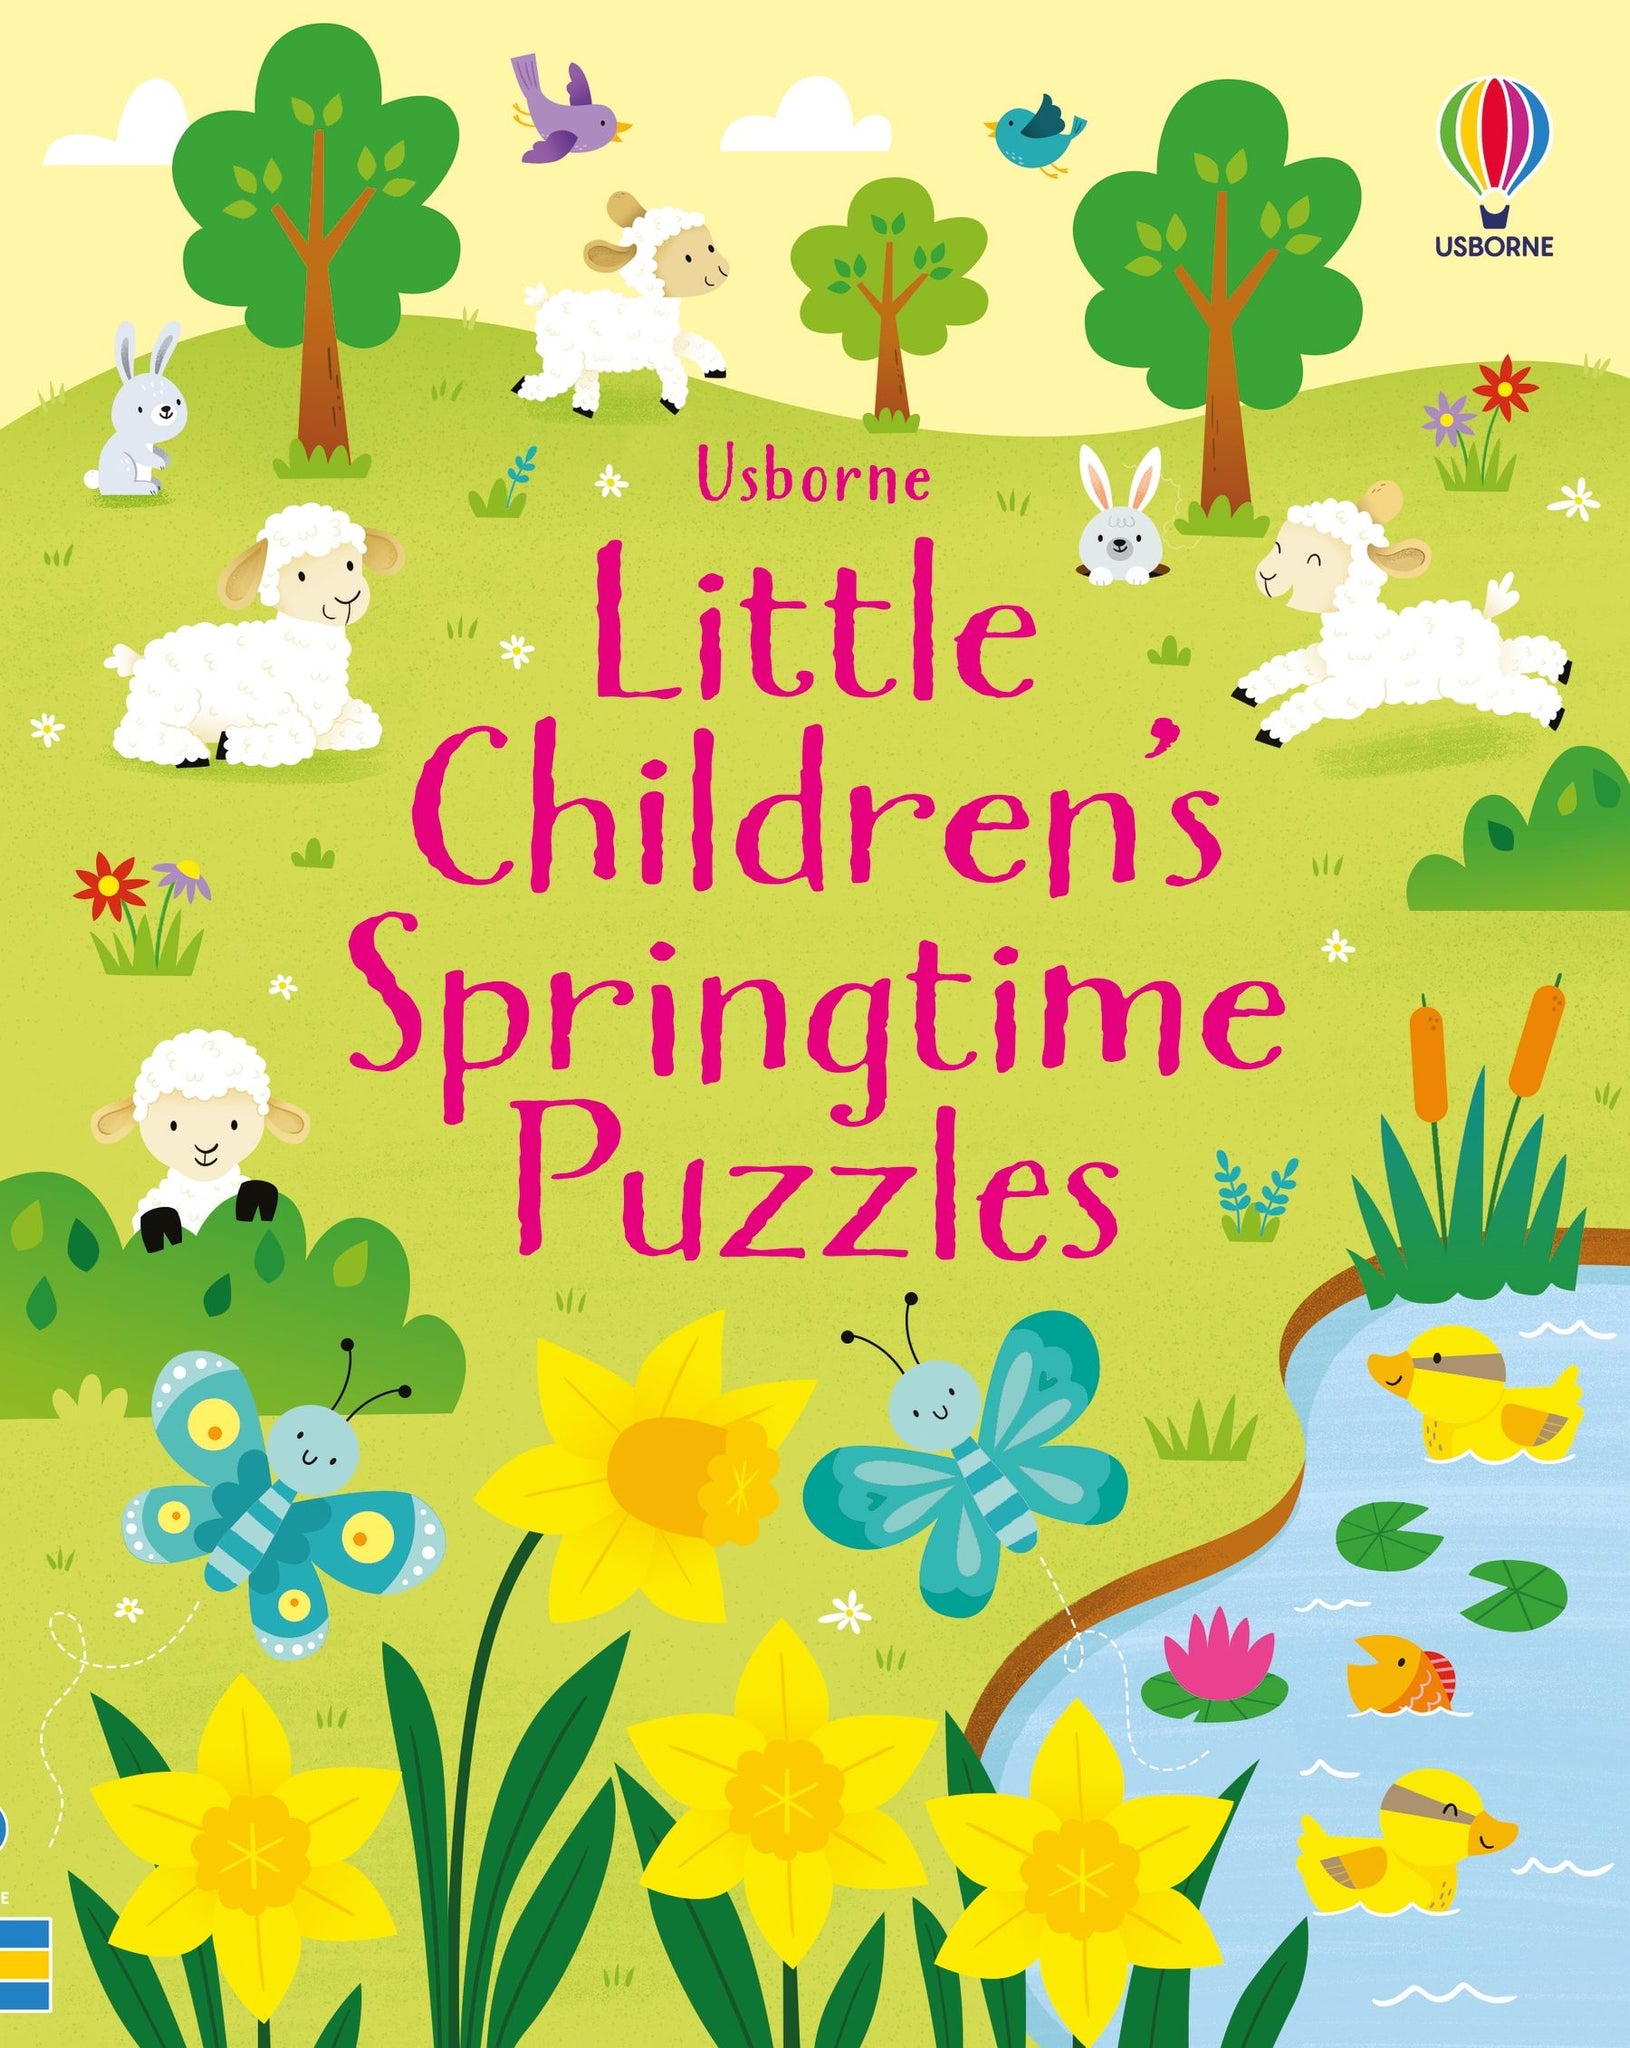 Usborne Little Children's Springtime Puzzles